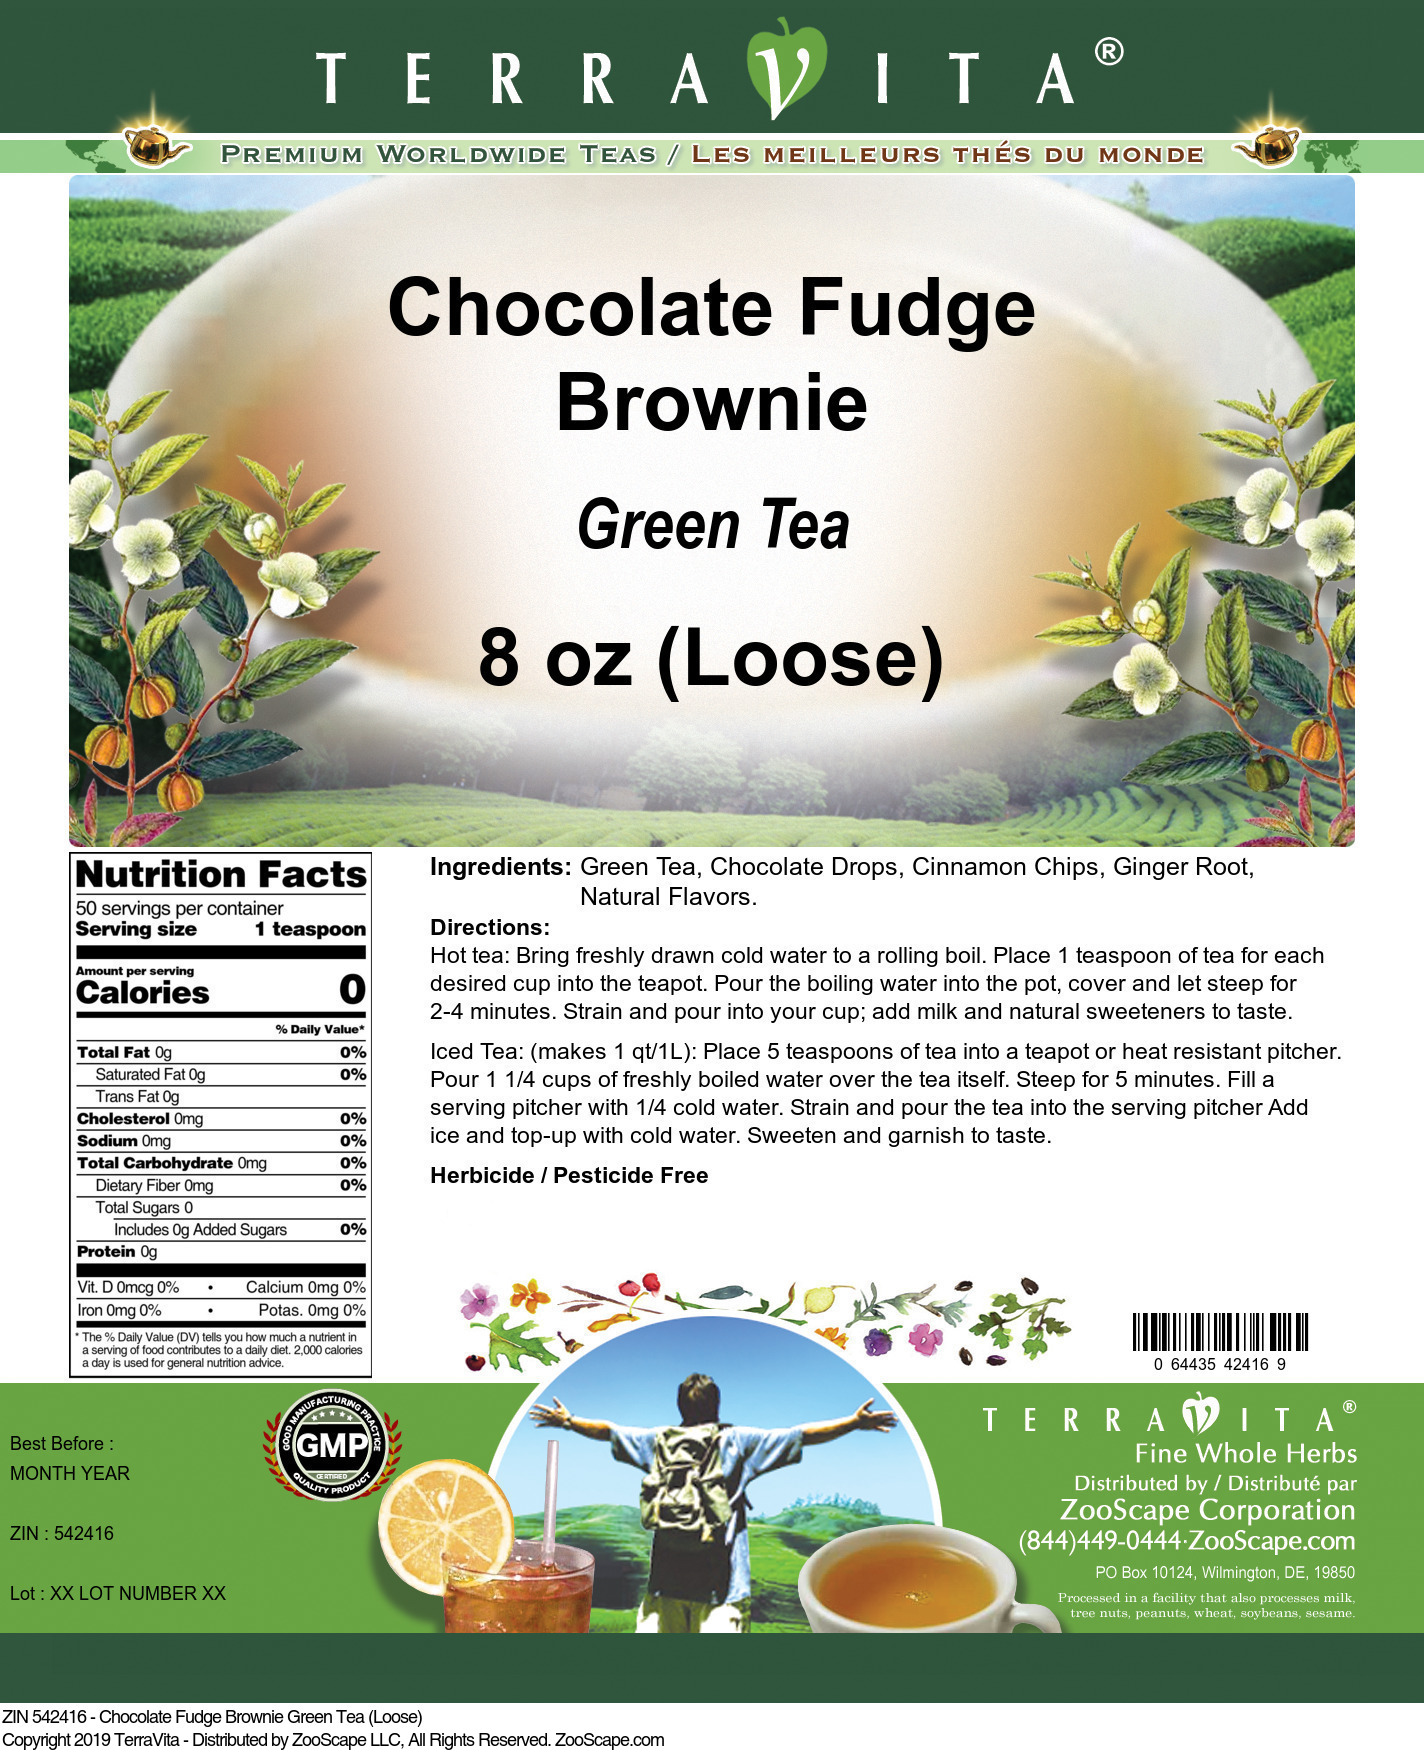 Chocolate Fudge Brownie Green Tea (Loose) - Label